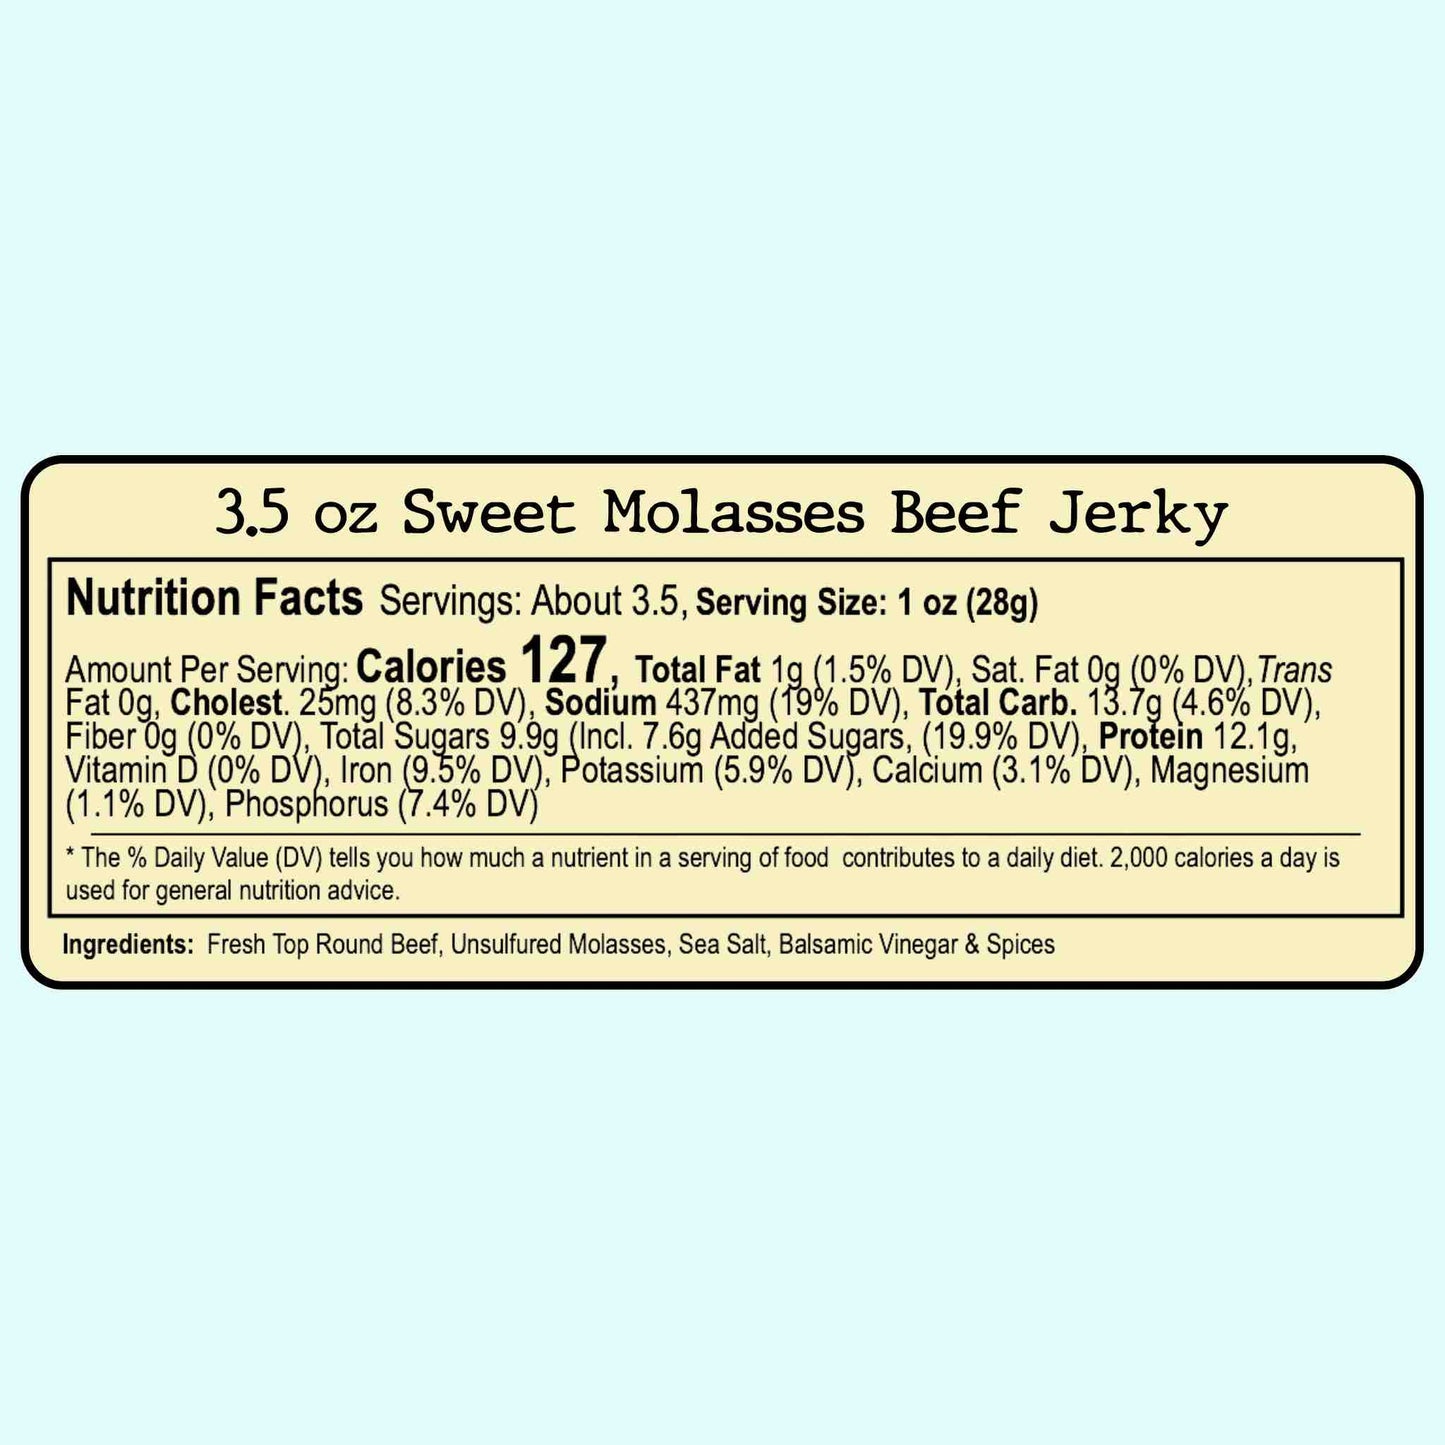 Sweet Molasses Beef Jerky